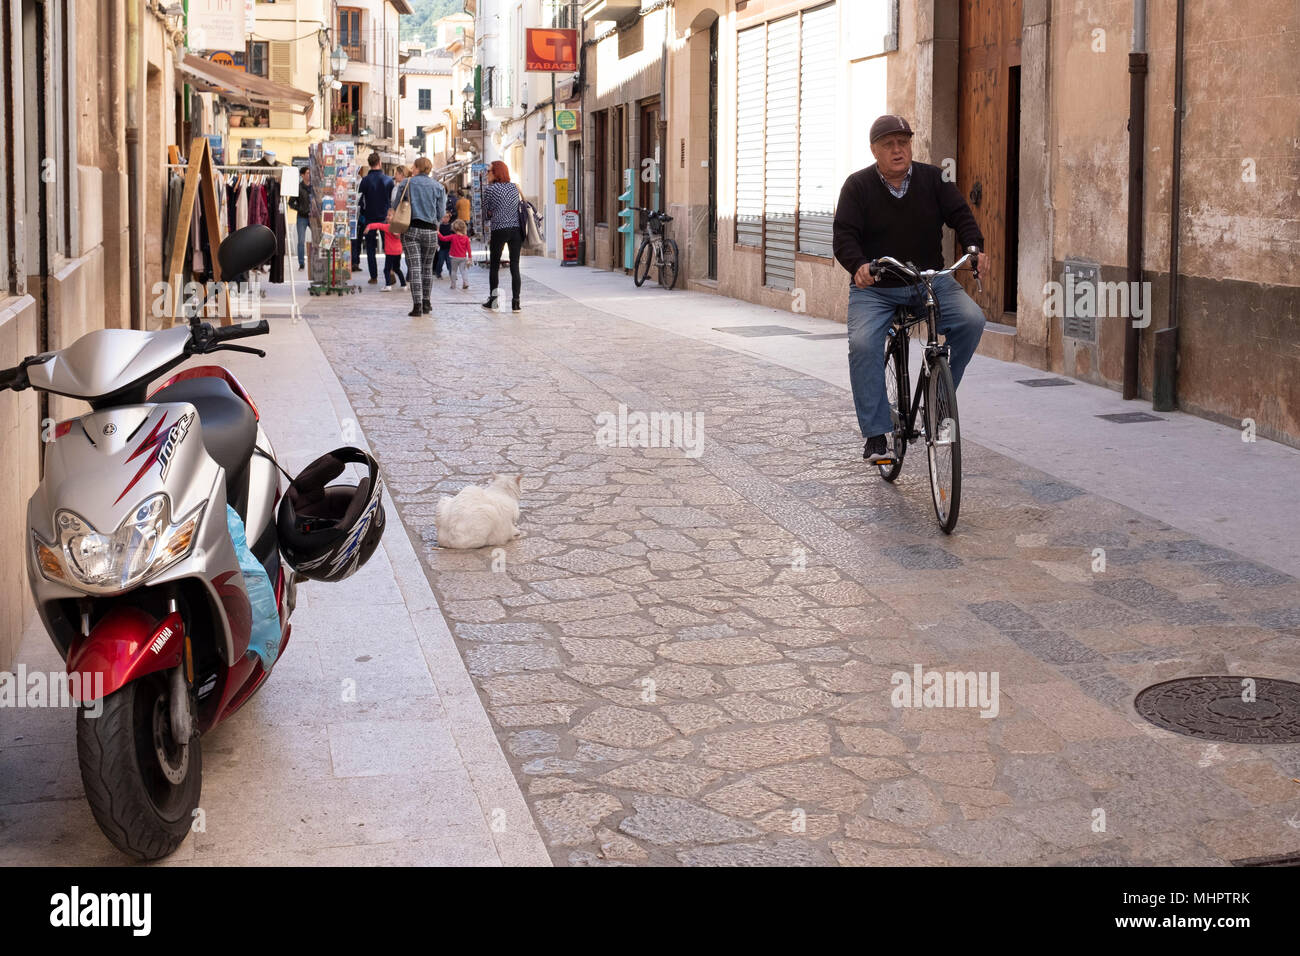 Street scene in Pollensa town, Mallorca, Spain. Stock Photo